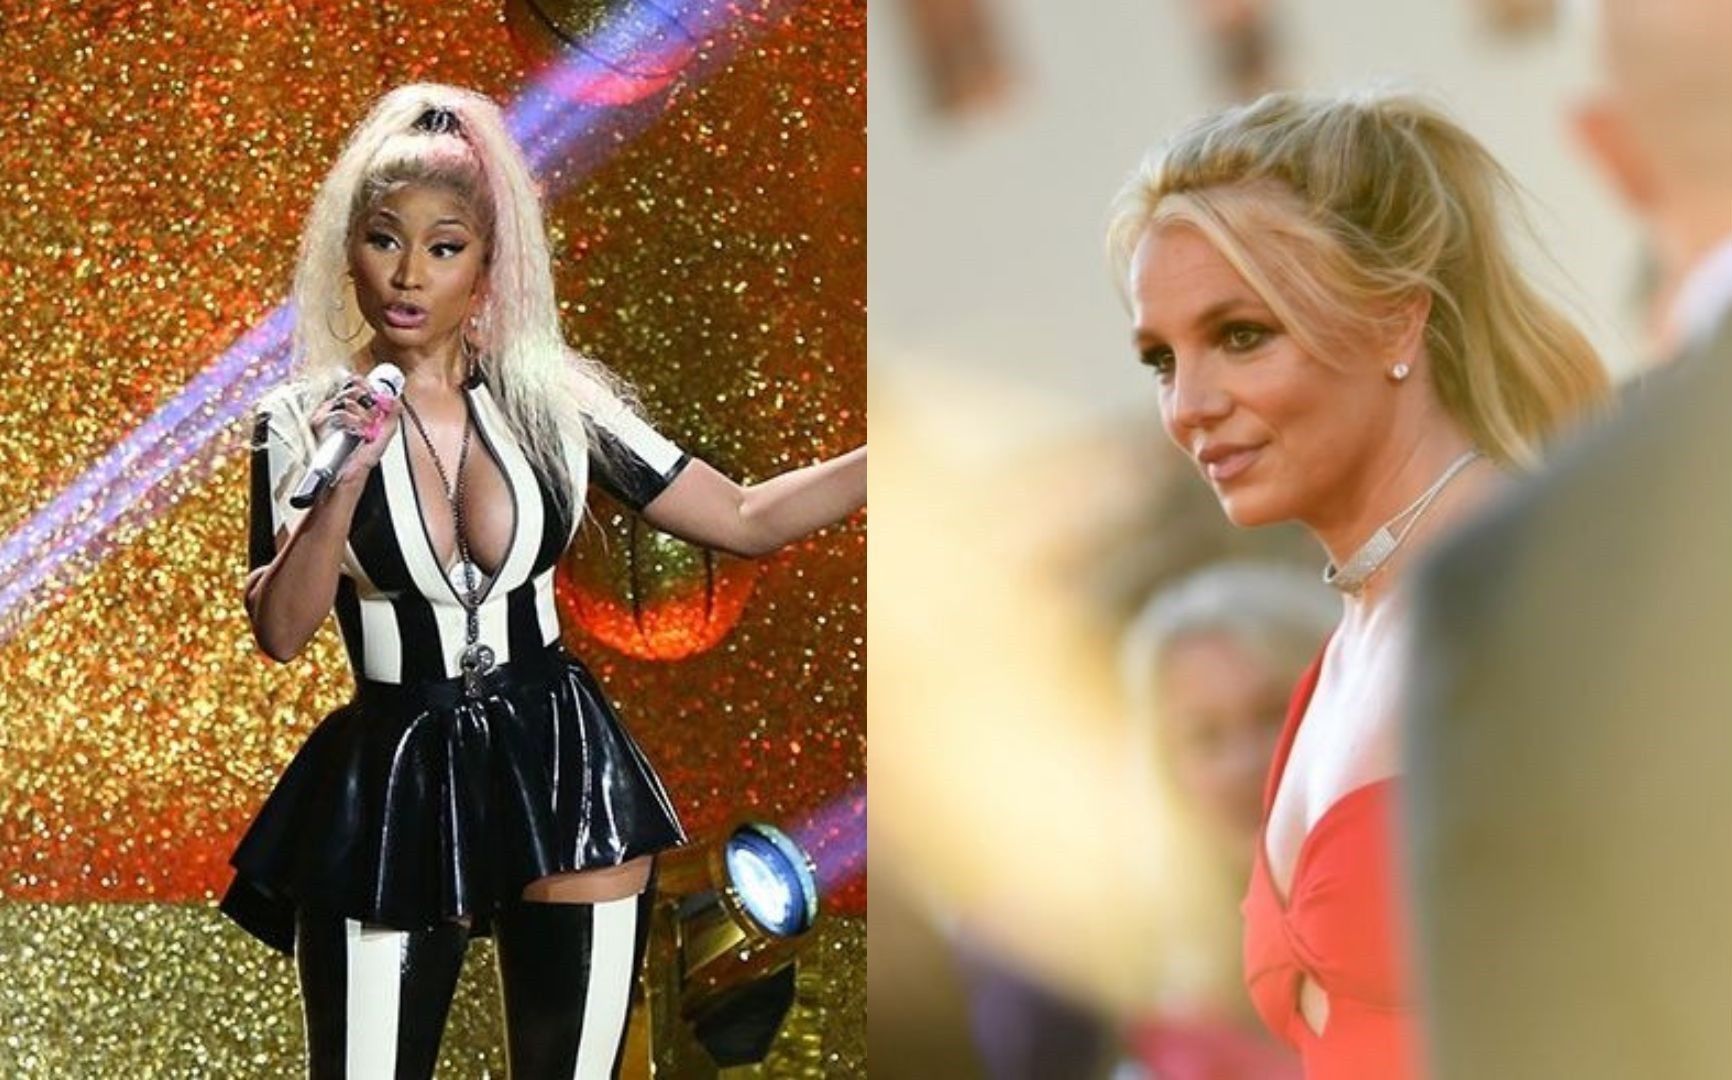 Nicki Minaj slams Kevin Federline over his drama with ex-wife Britney Spears